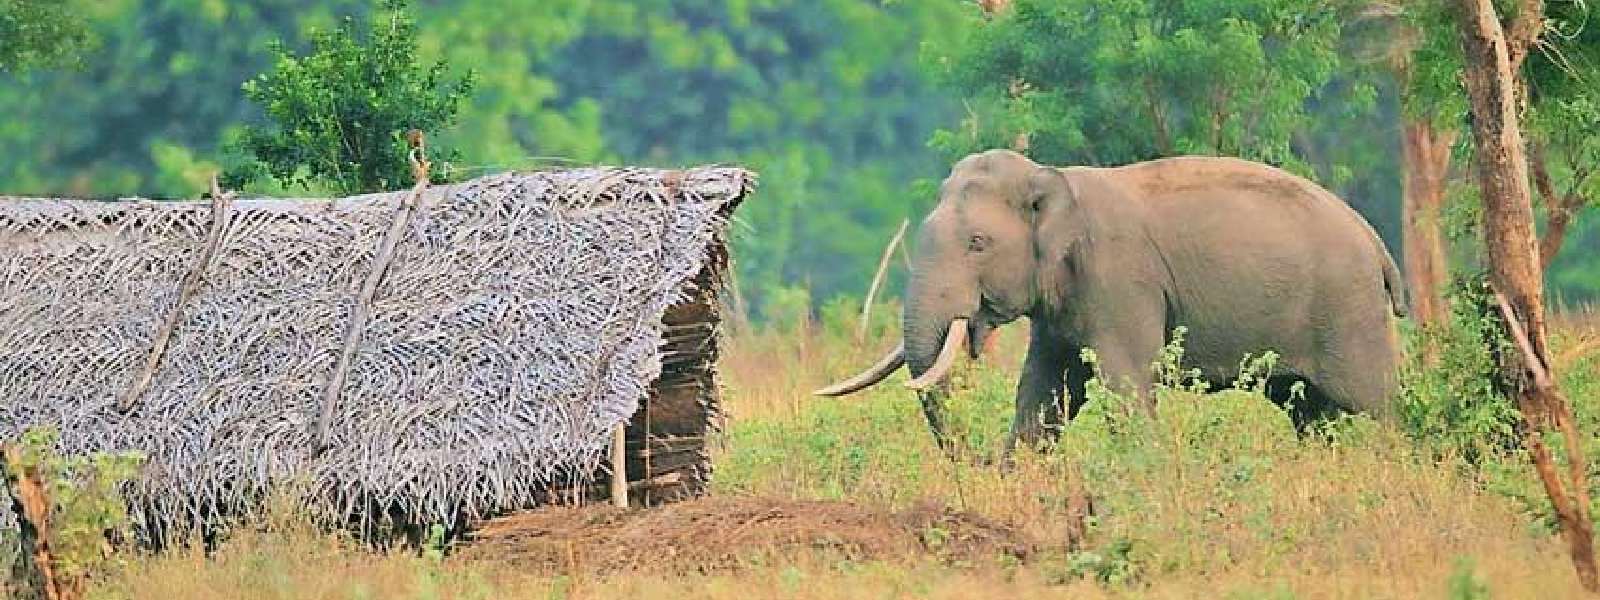 More measures to prevent elephant encroachment